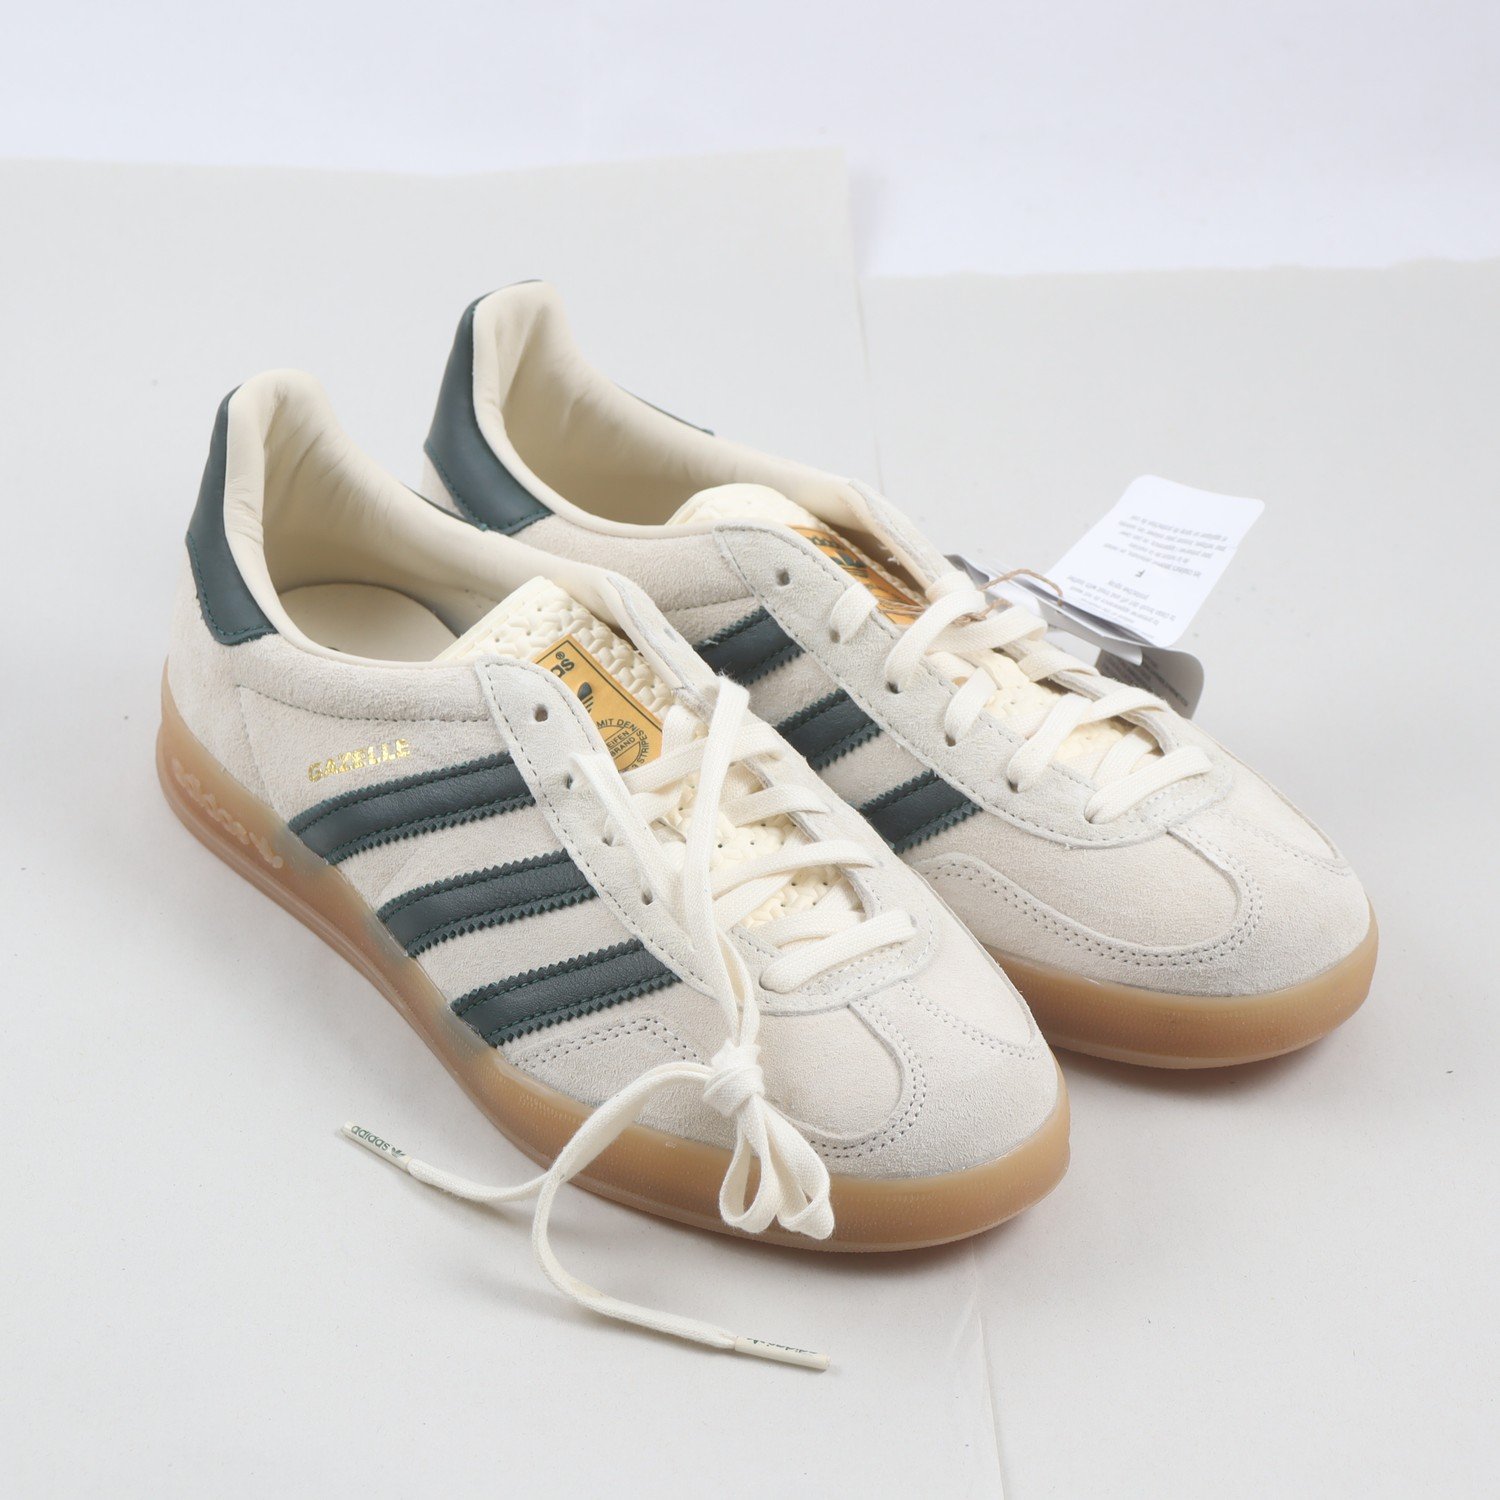 Sneakers, Adidas Gazelle, stl. 40 (UK 6.5)